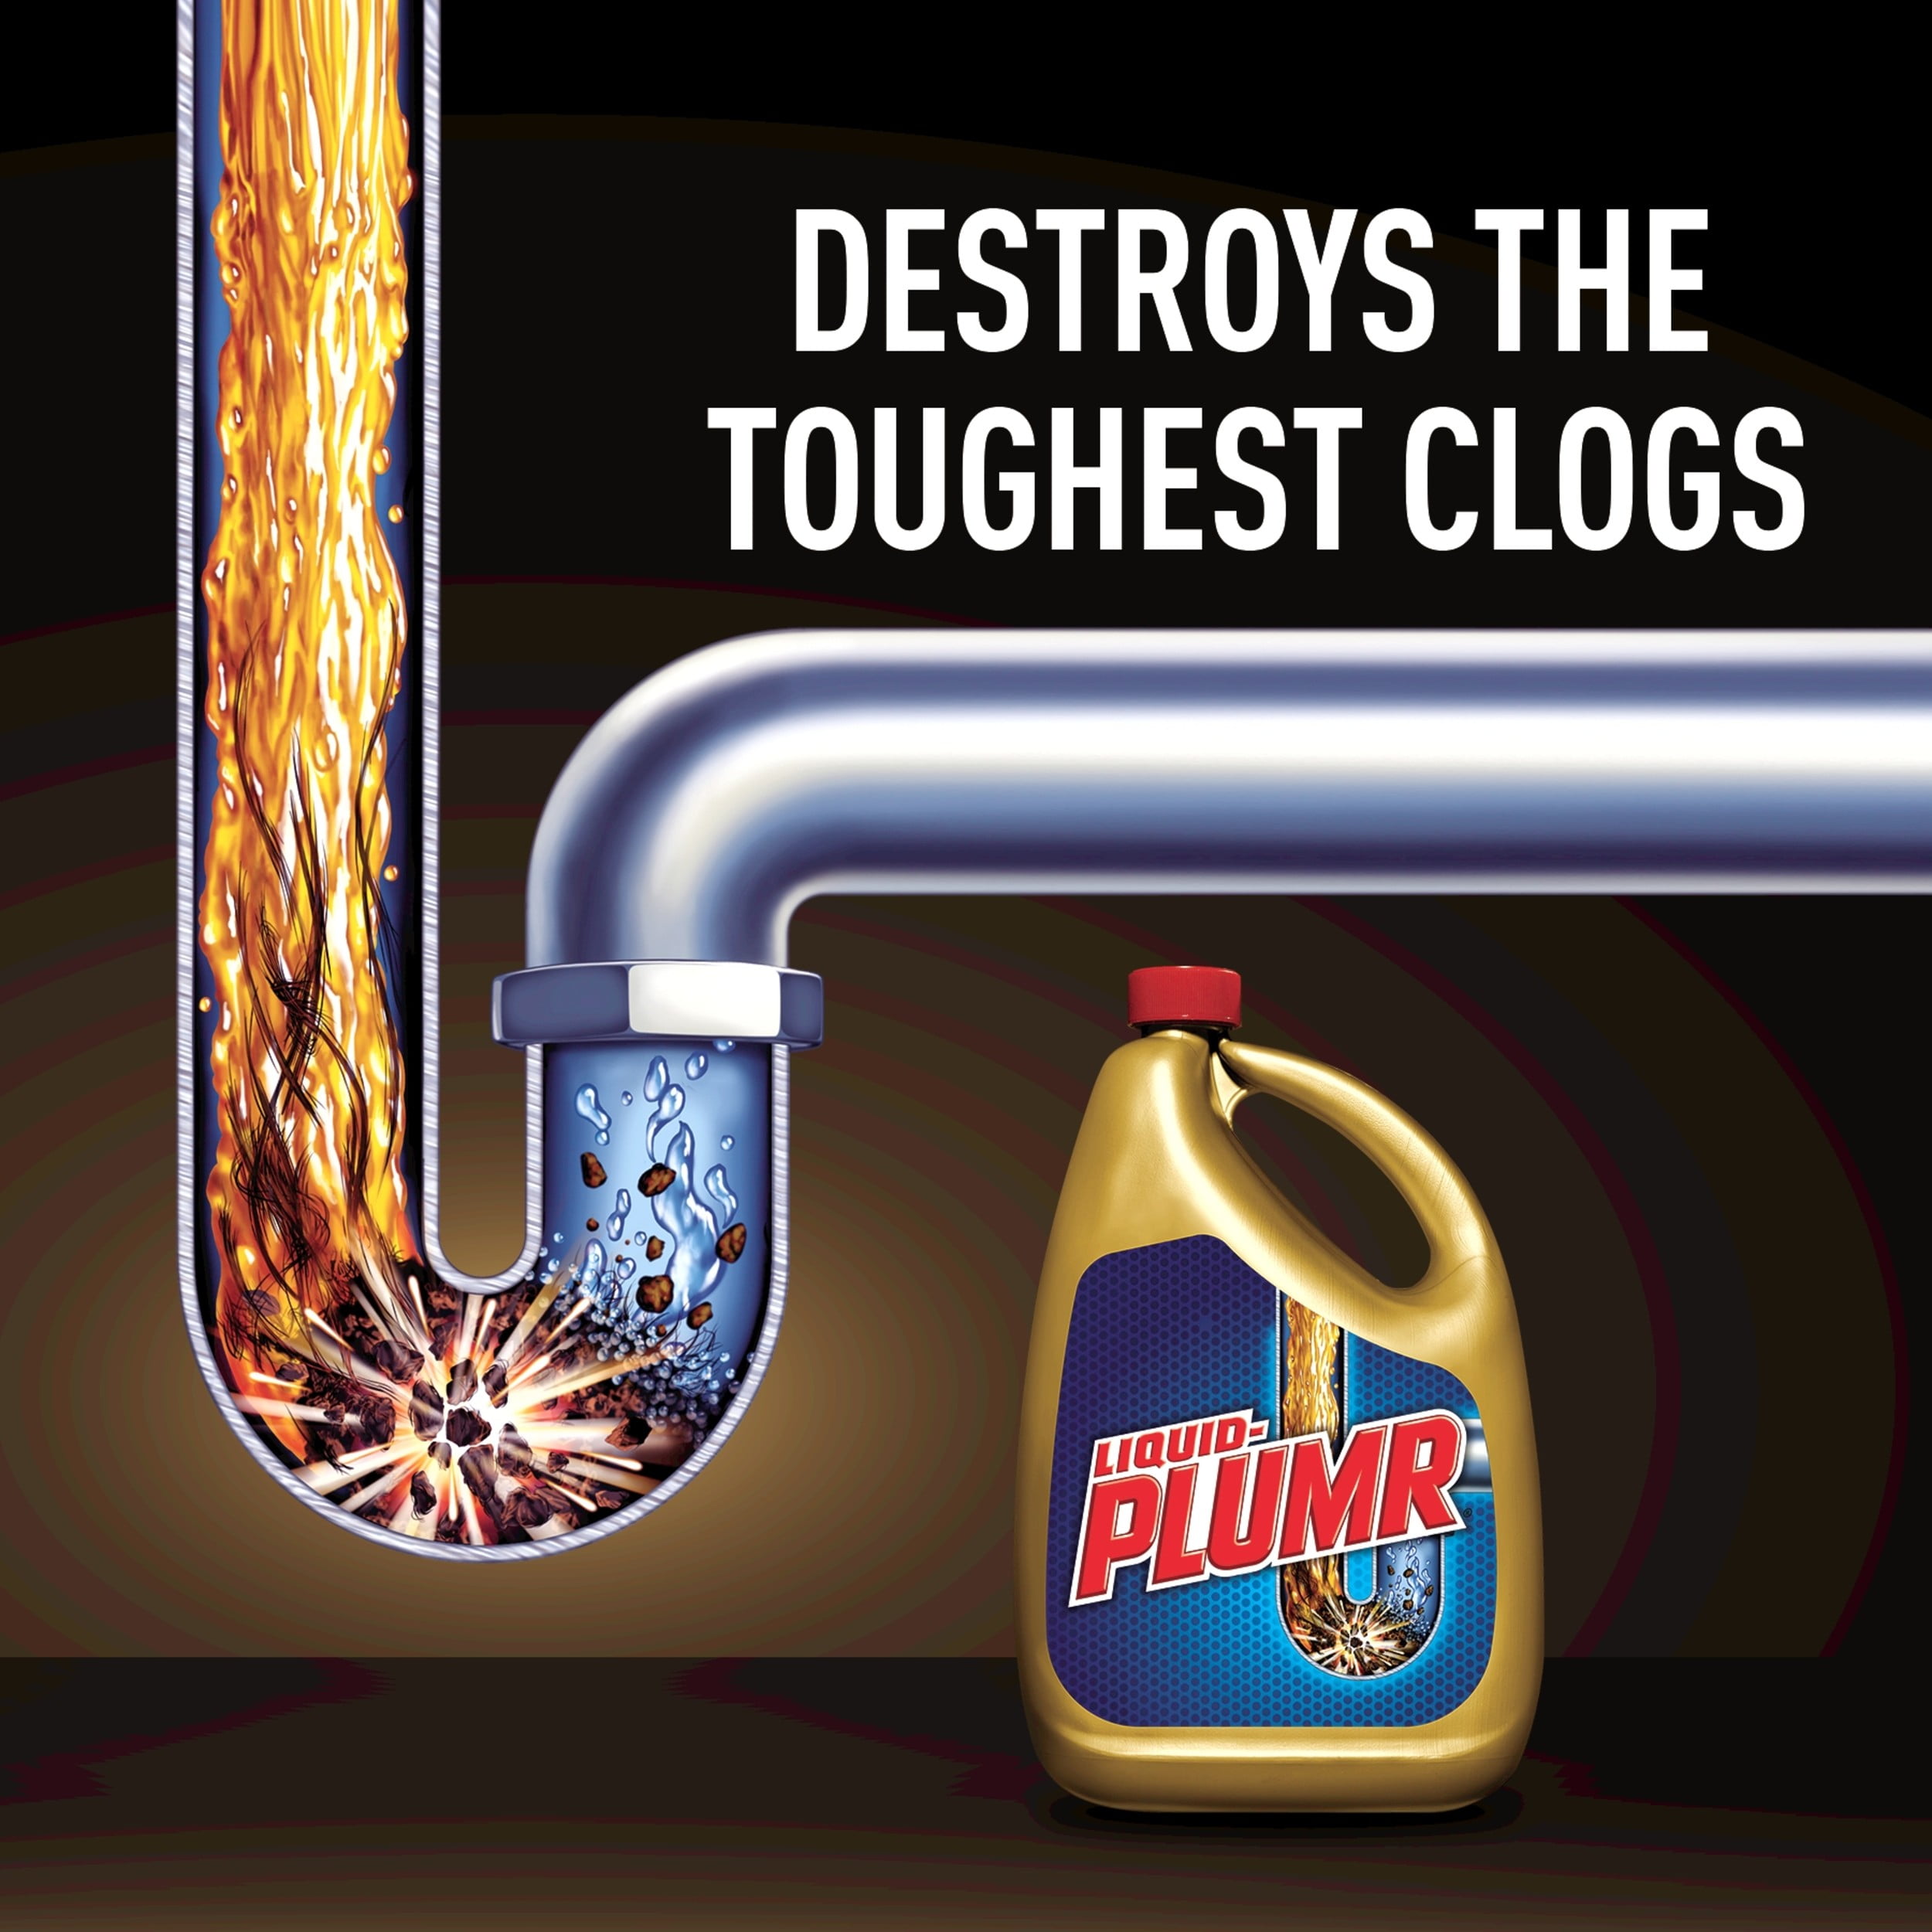 Liquid-Plumr 80 oz. Pro Strength Full Clog Destroyer and Drain